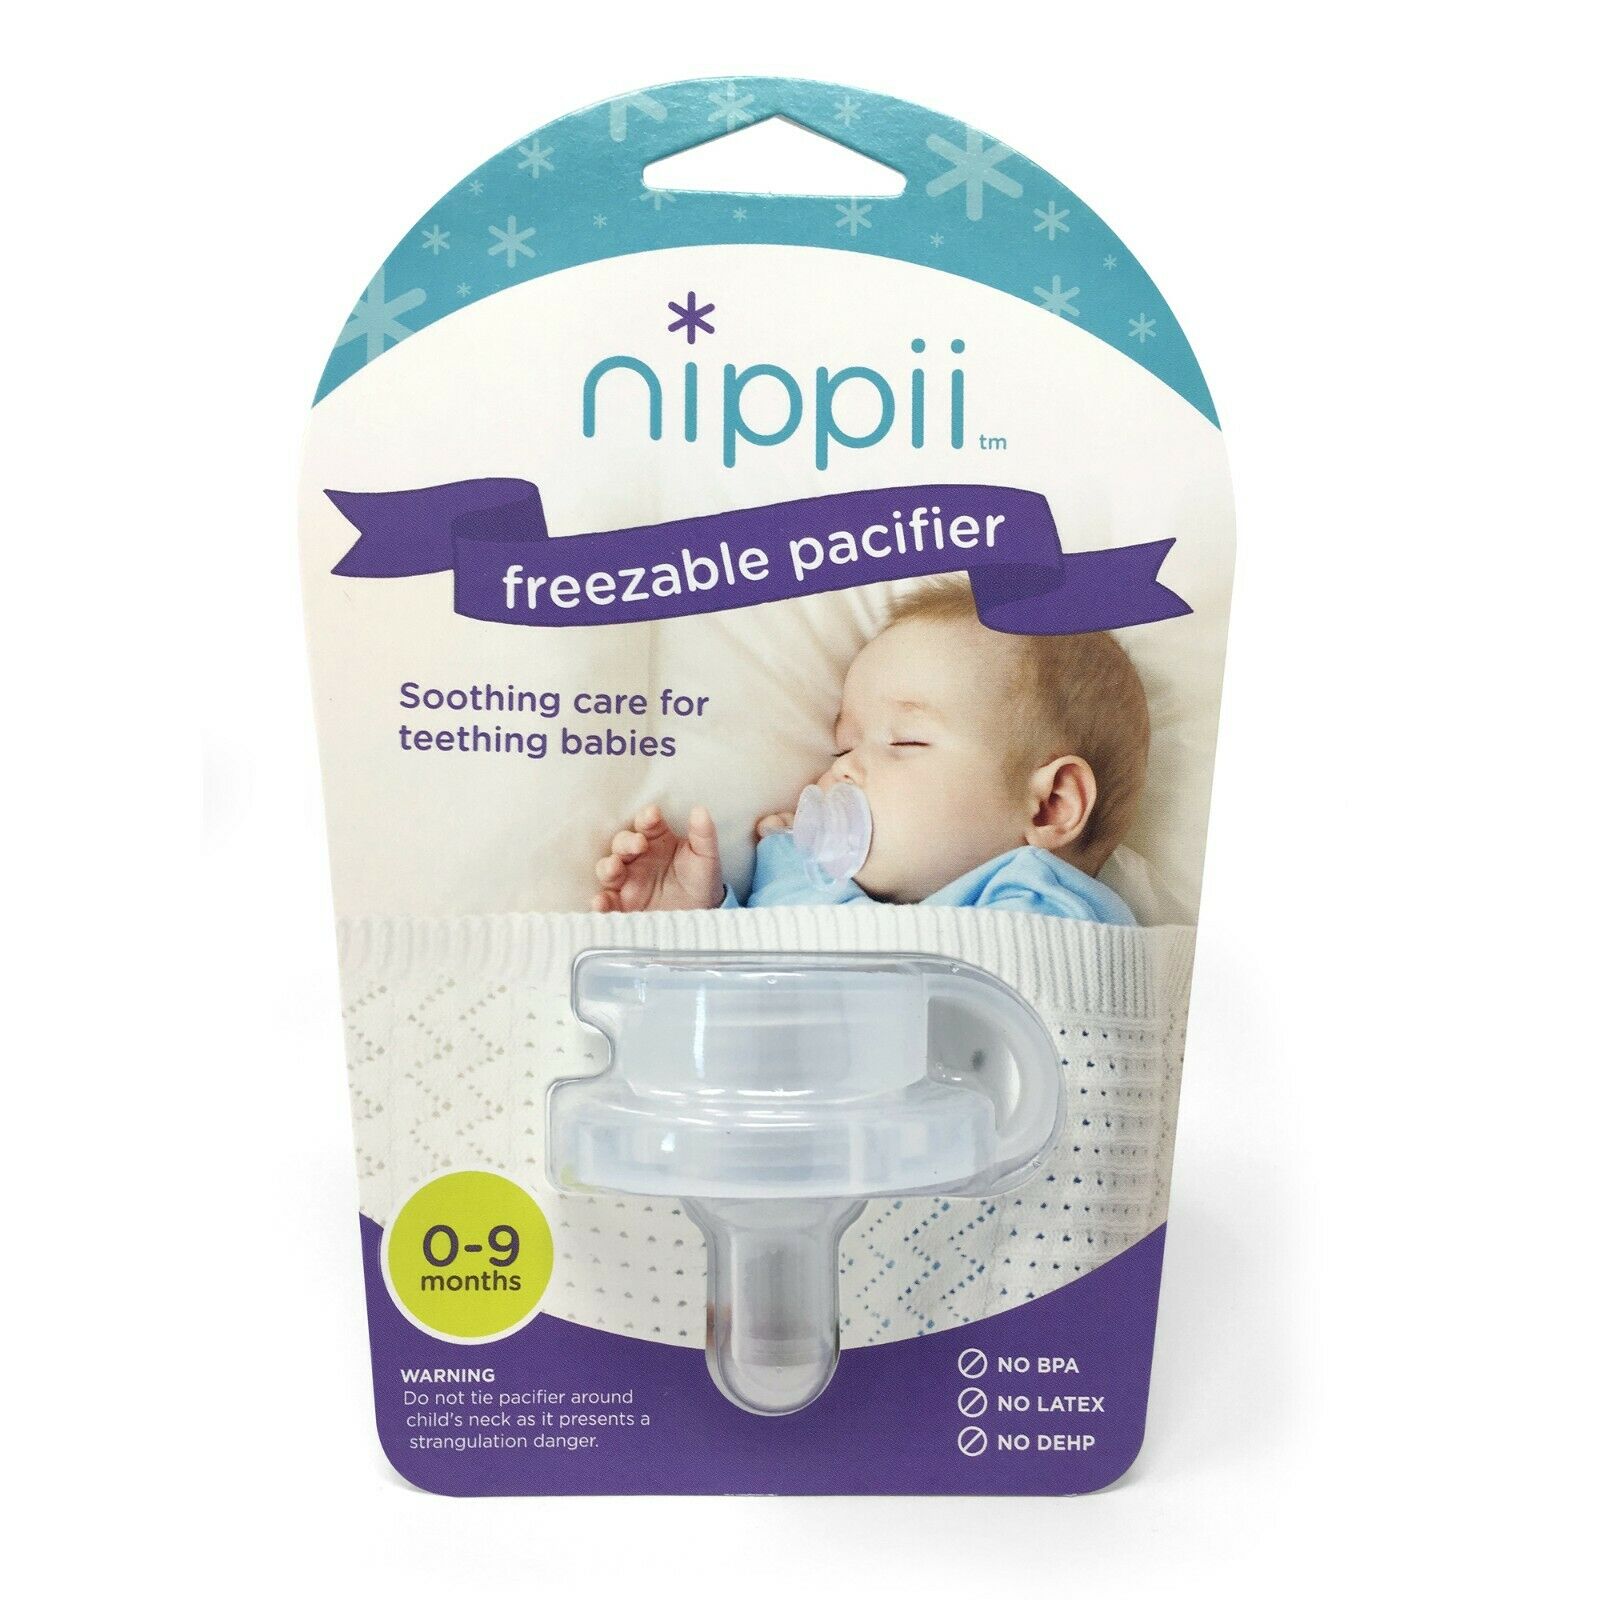 Nippii Baby Freezable Teething Pacifier Soothing Care For Teething Babies